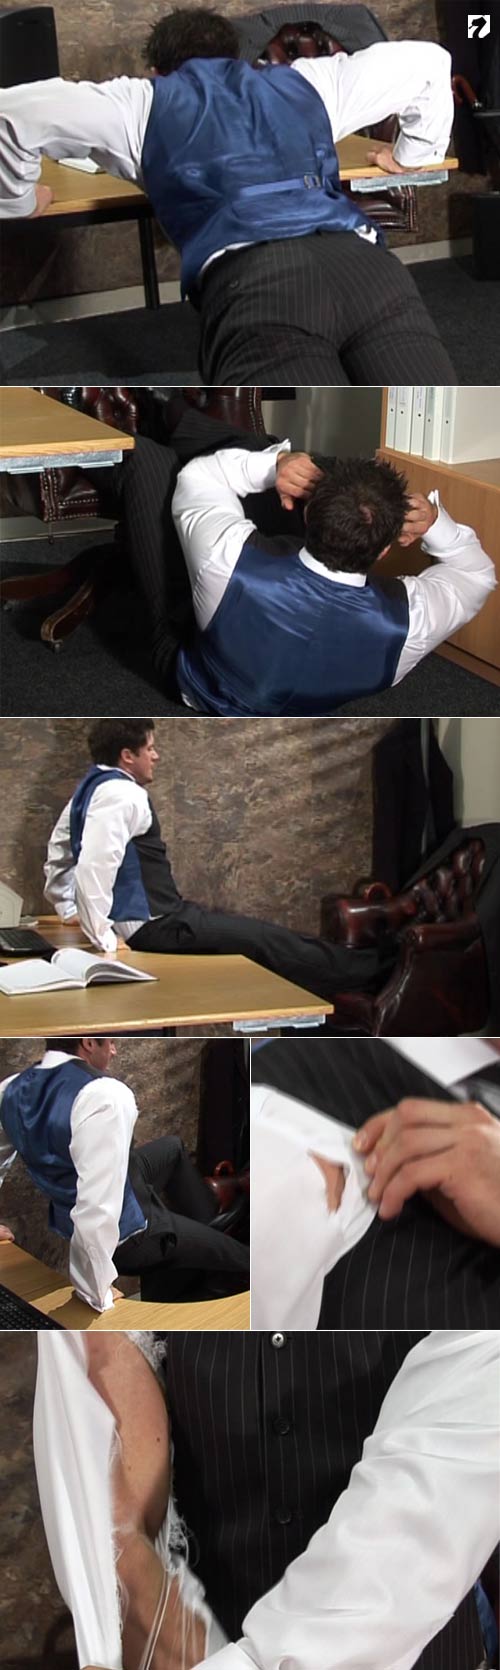 Office Workout (starring Sam Lloyd) on MenAtPlay